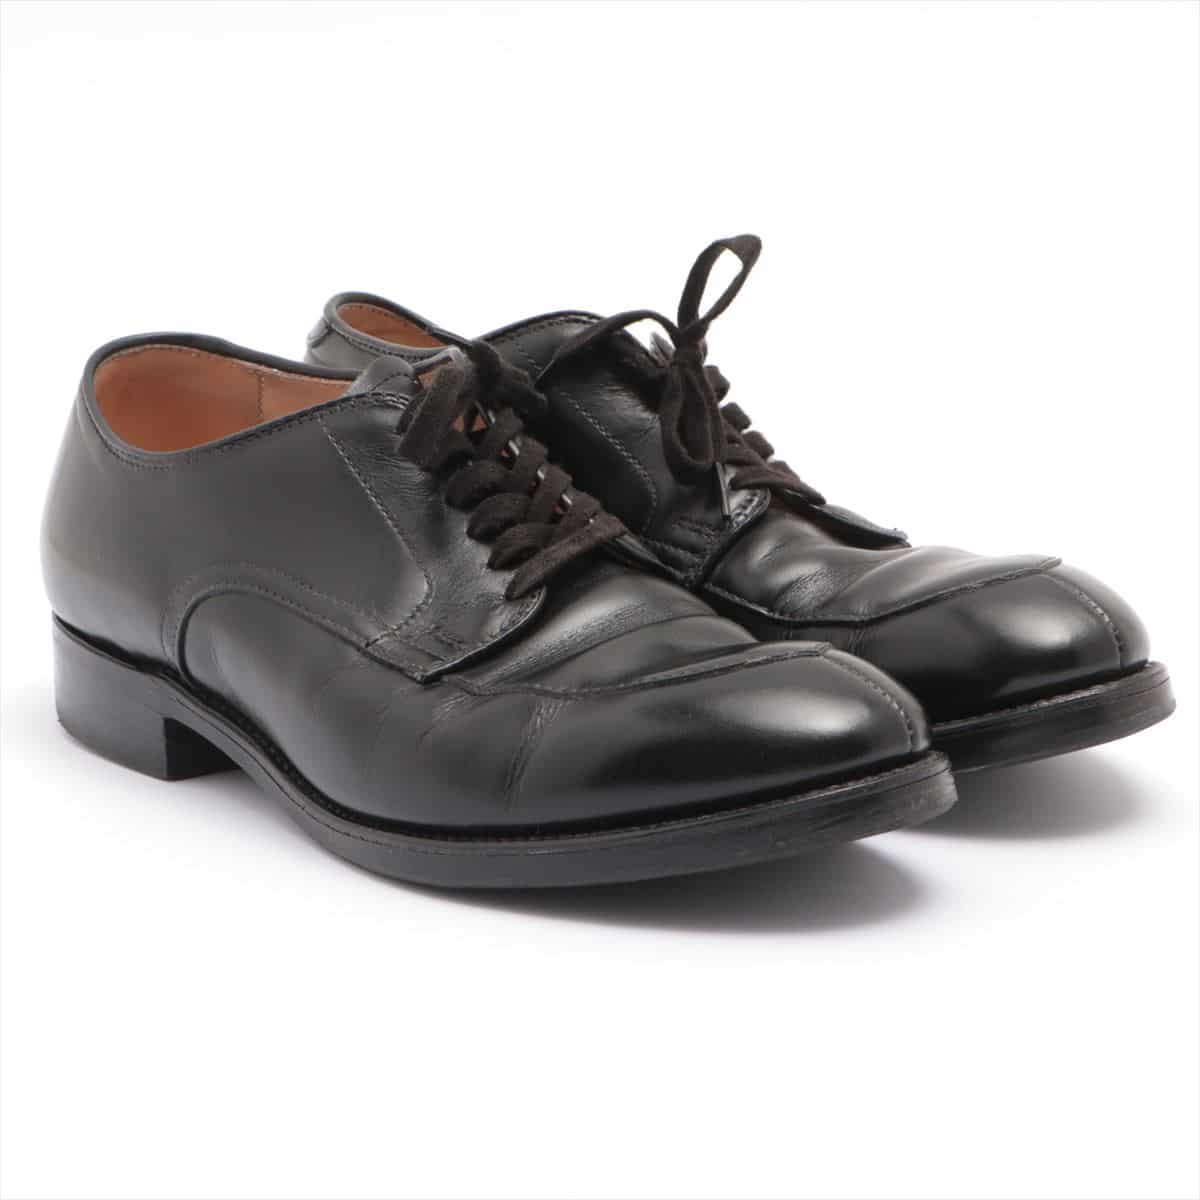 Alden Leather Leather shoes 8 Men's Black 54411 Resoled